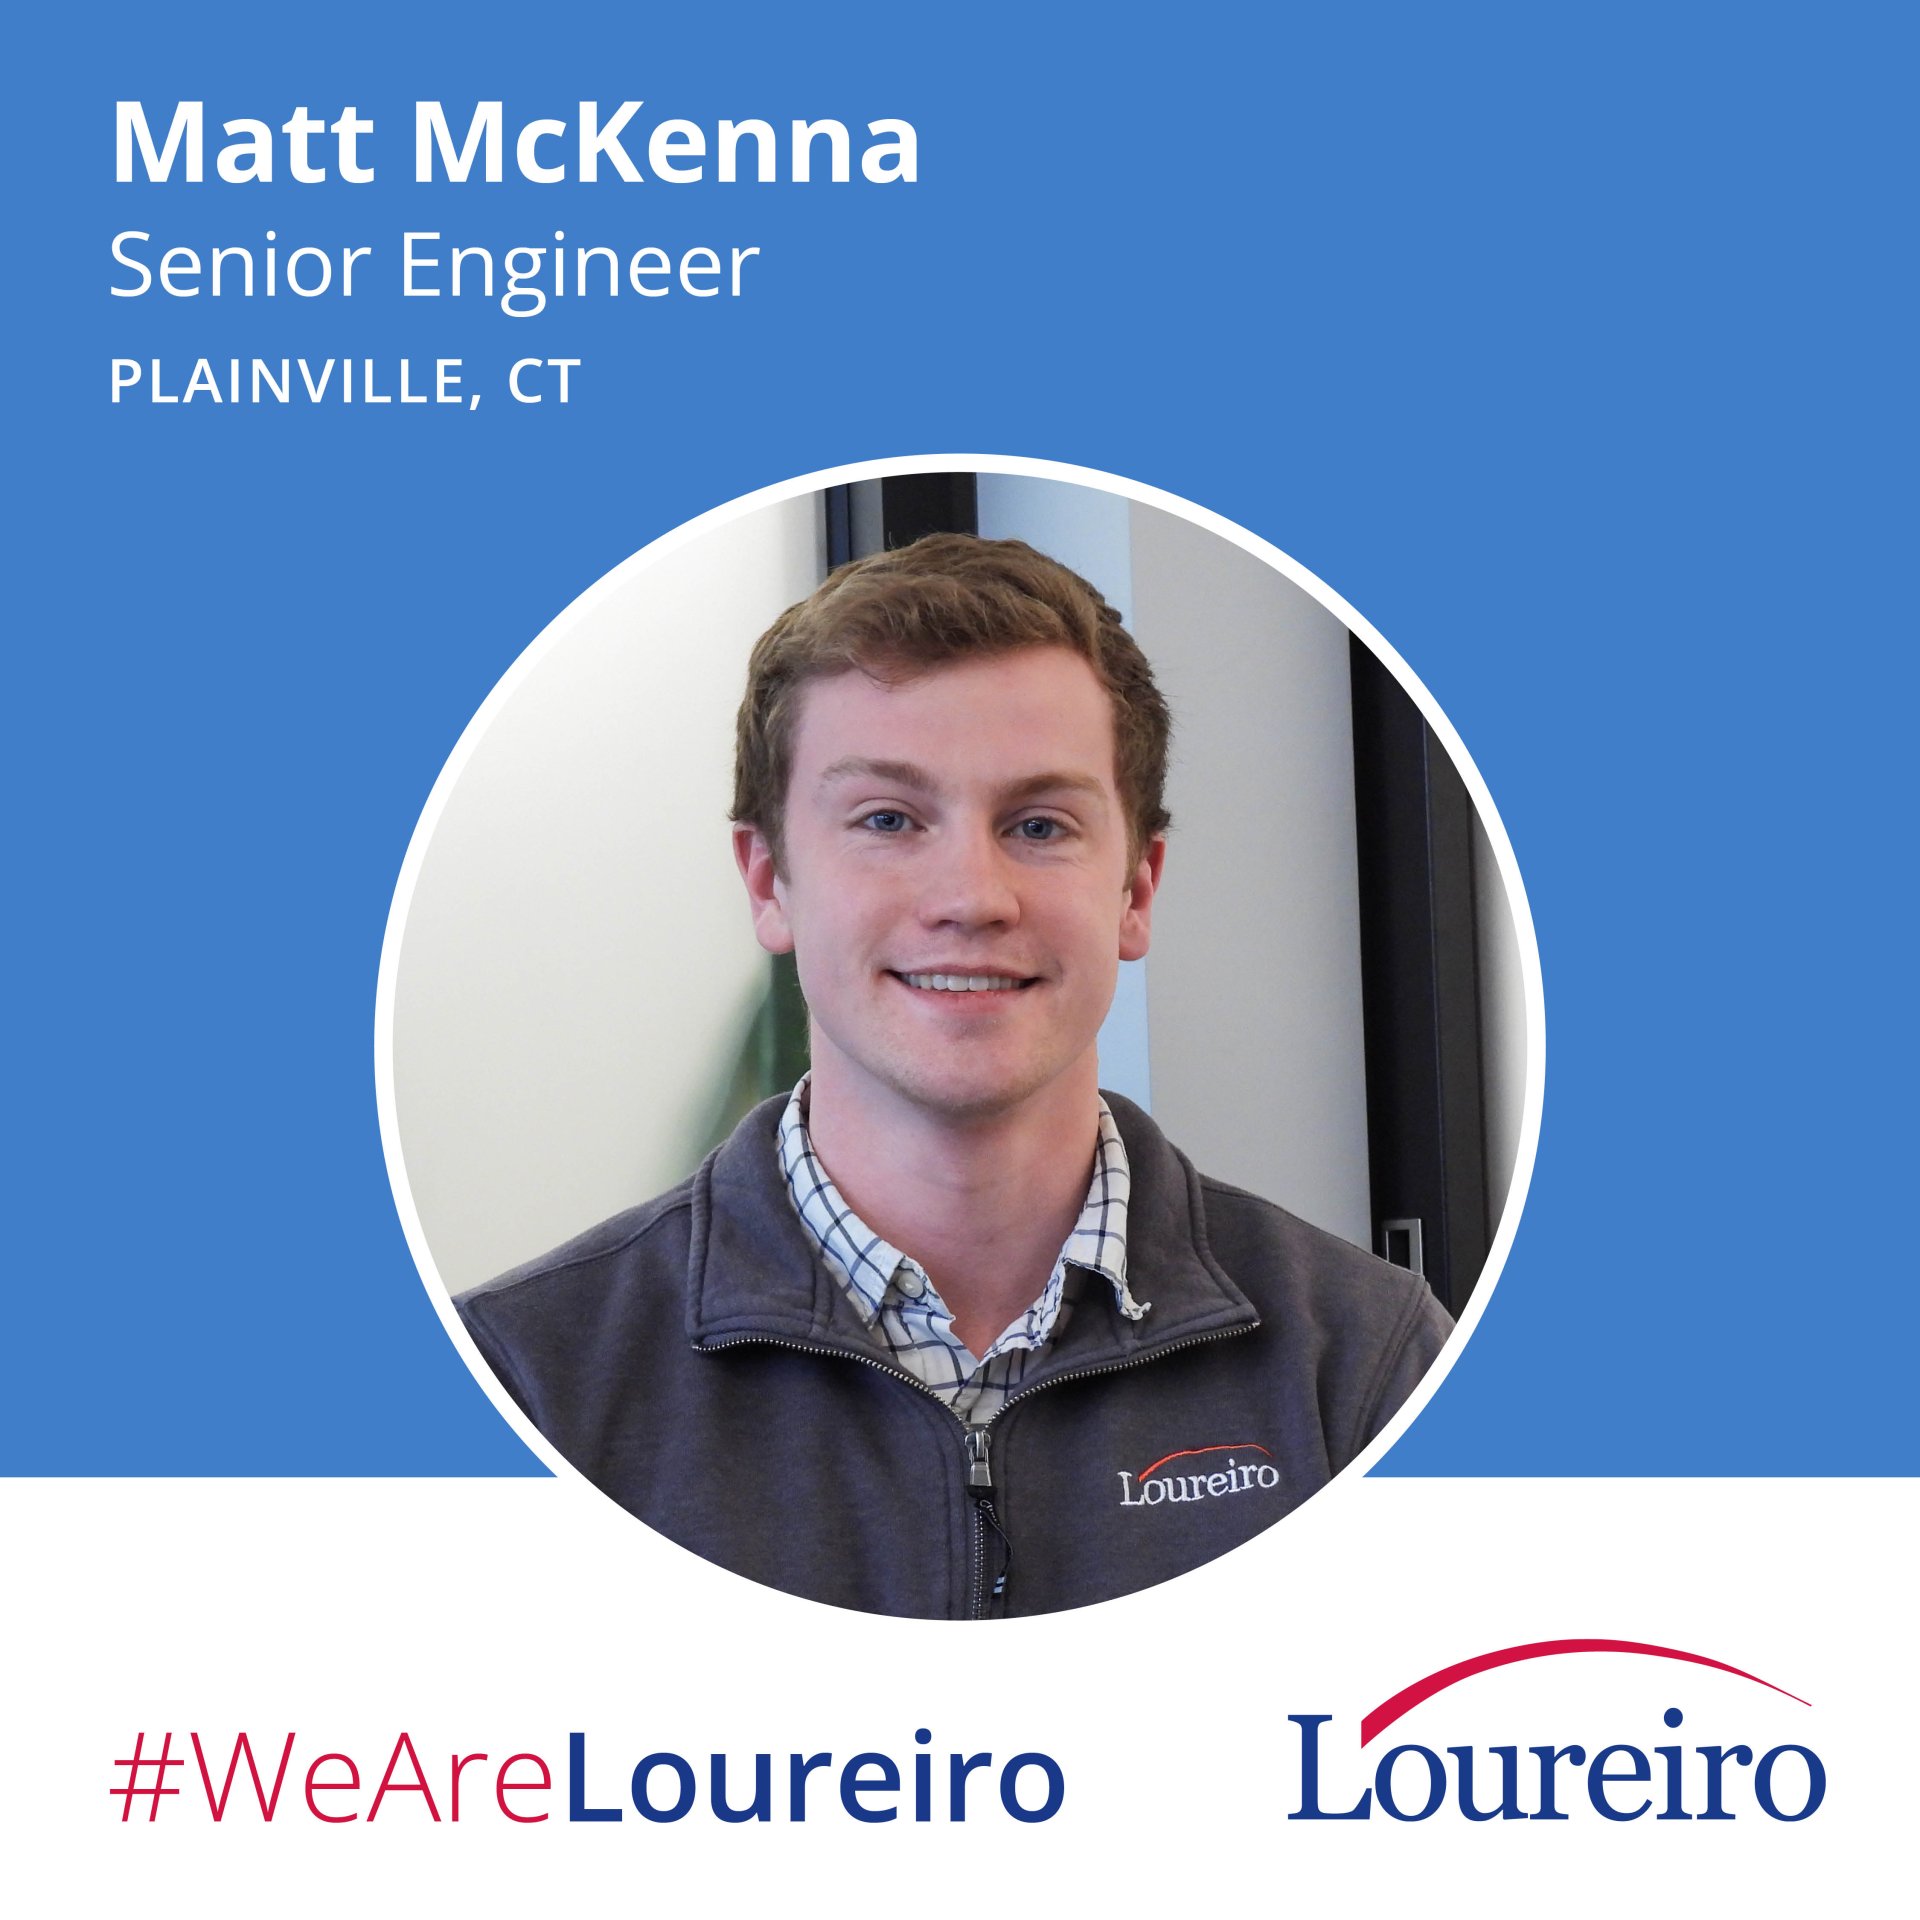 We Are Loureiro: Matt McKenna